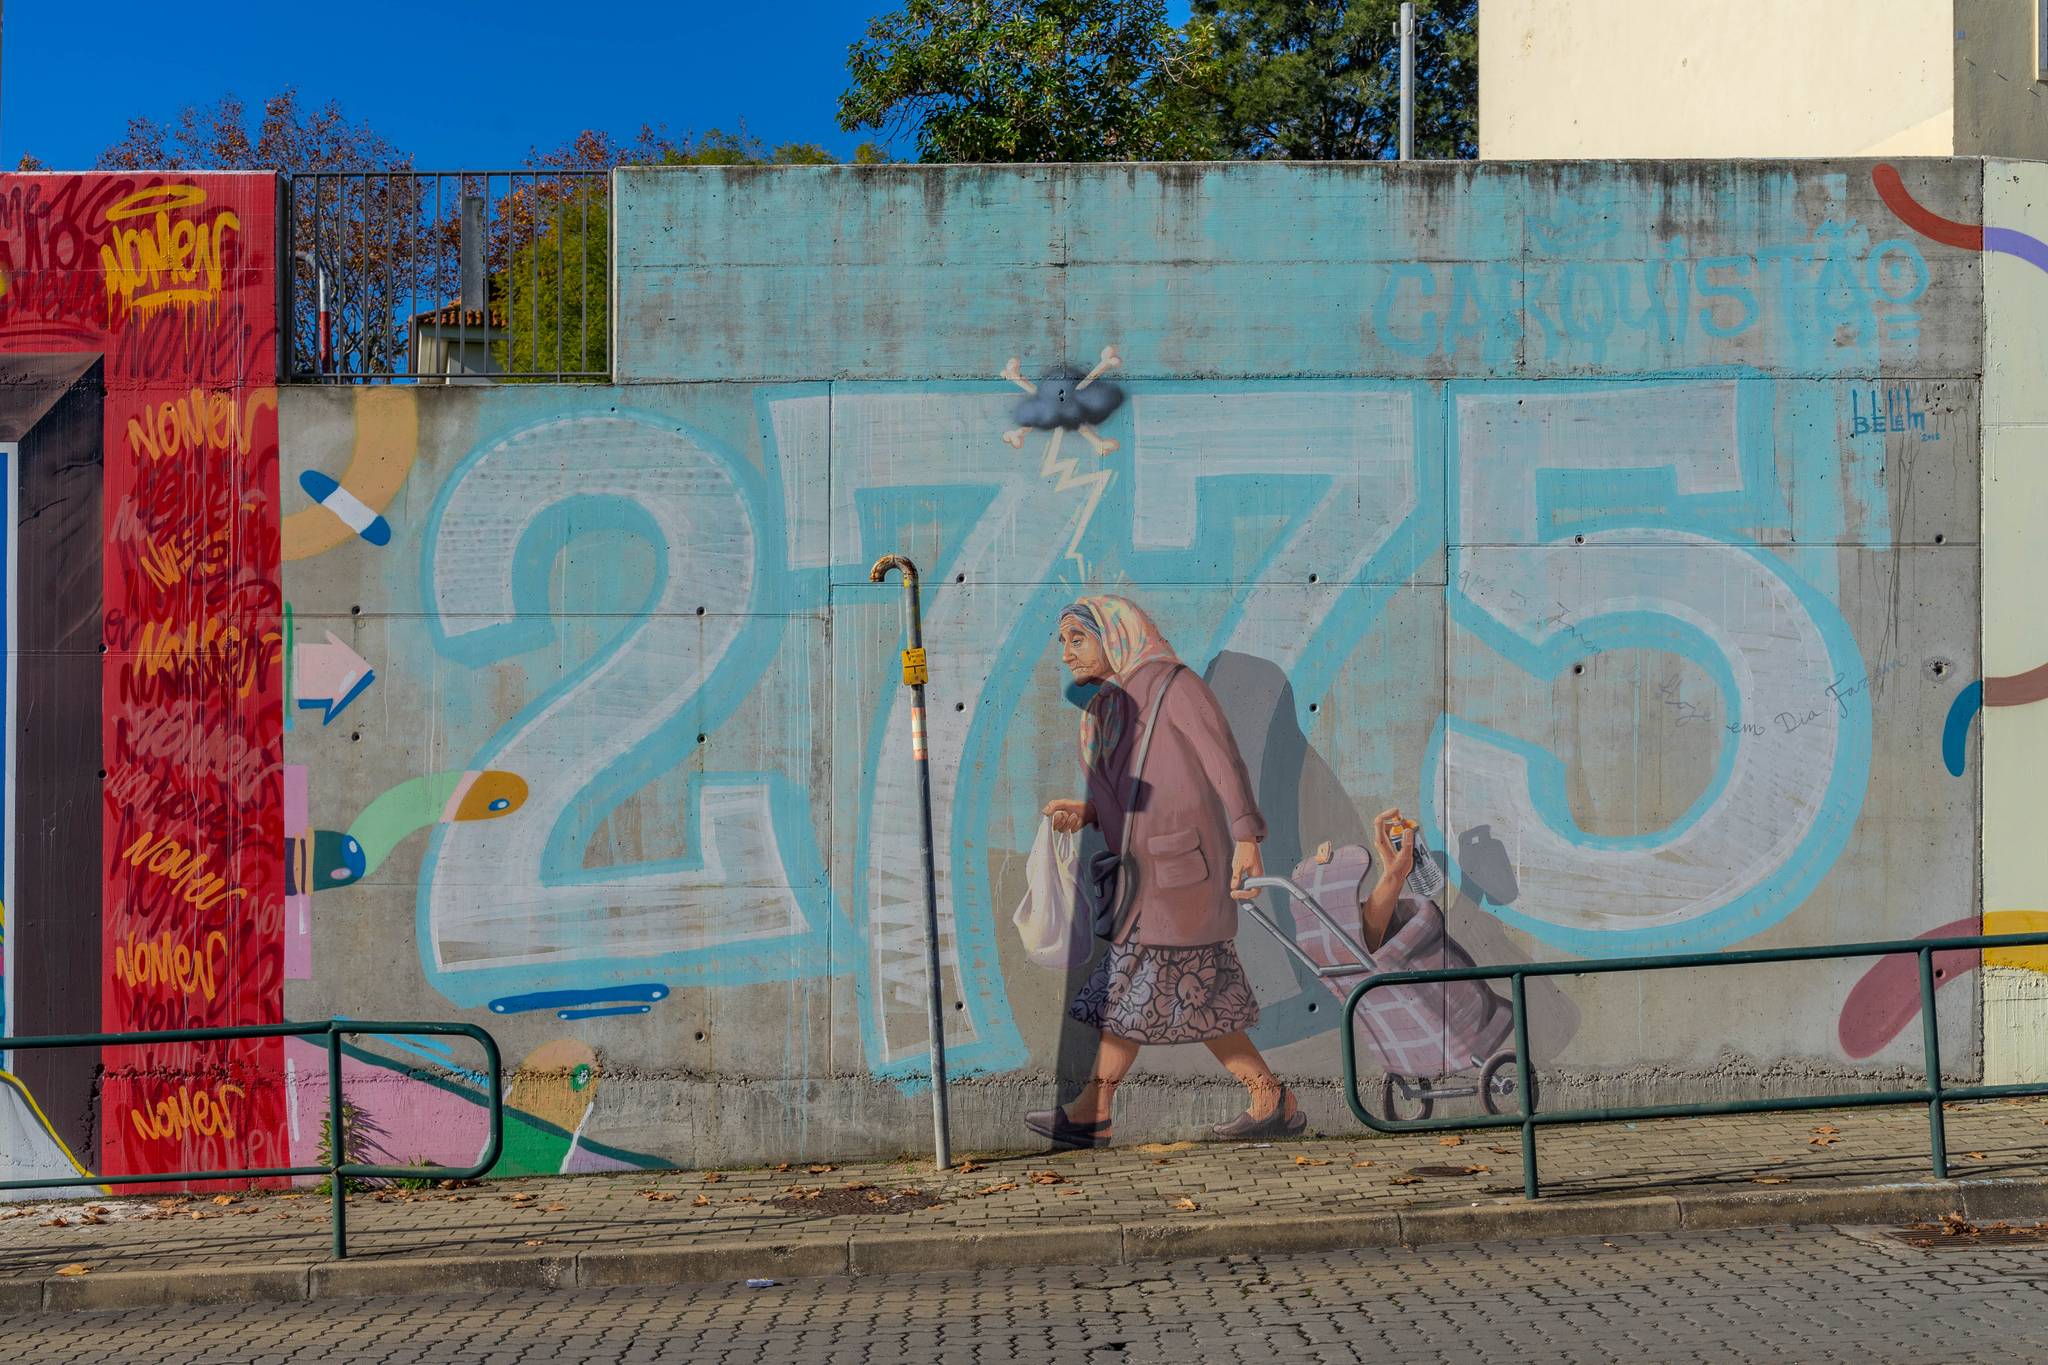 &mdash;Carcavelos - 30 Years of Graffiti